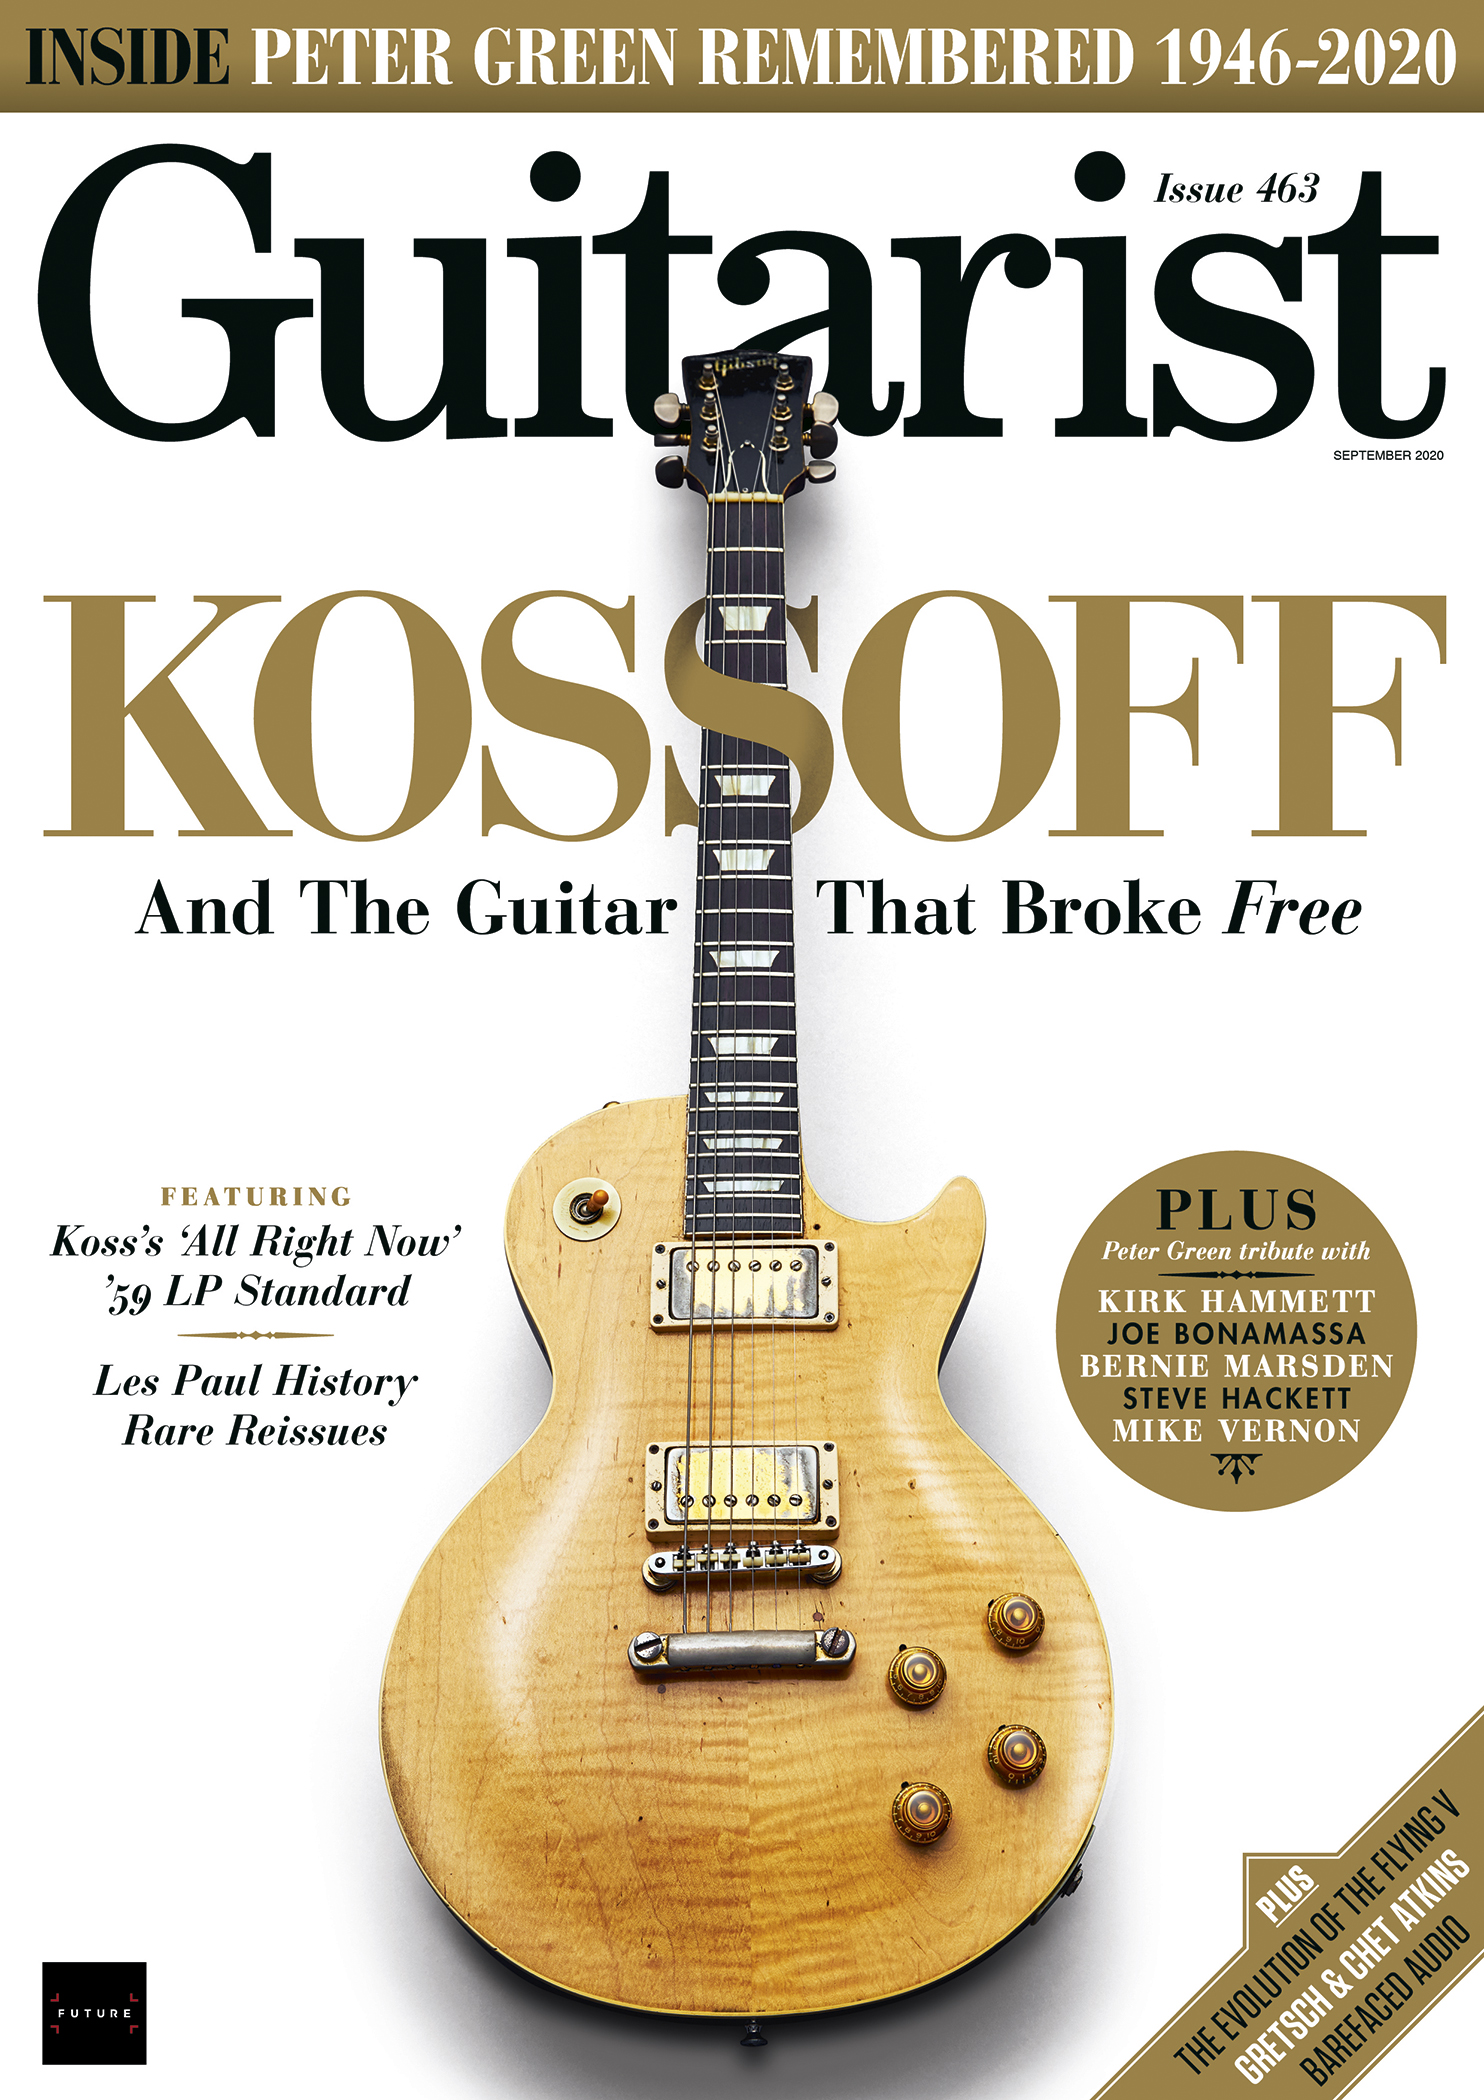 Kossoff Les Paul Guitarist cover photograph by Adam Gasson